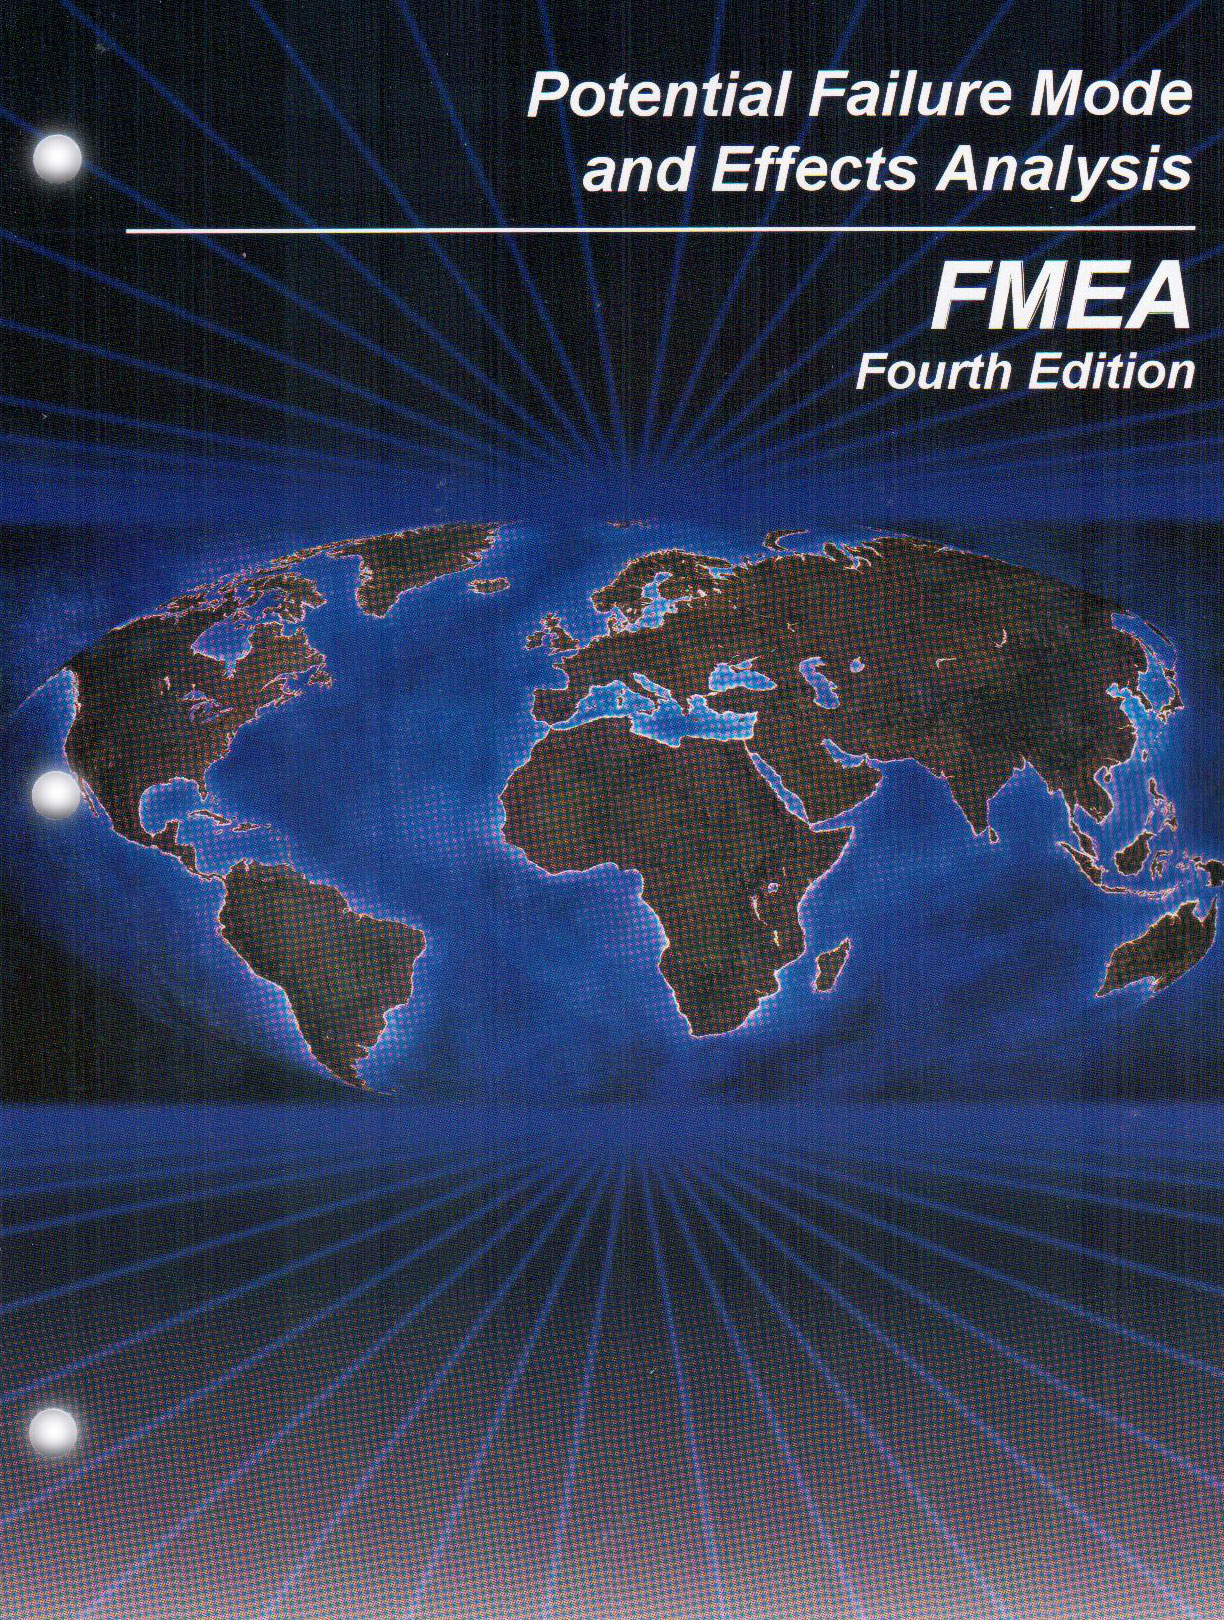 Ford motor company fmea handbook #8